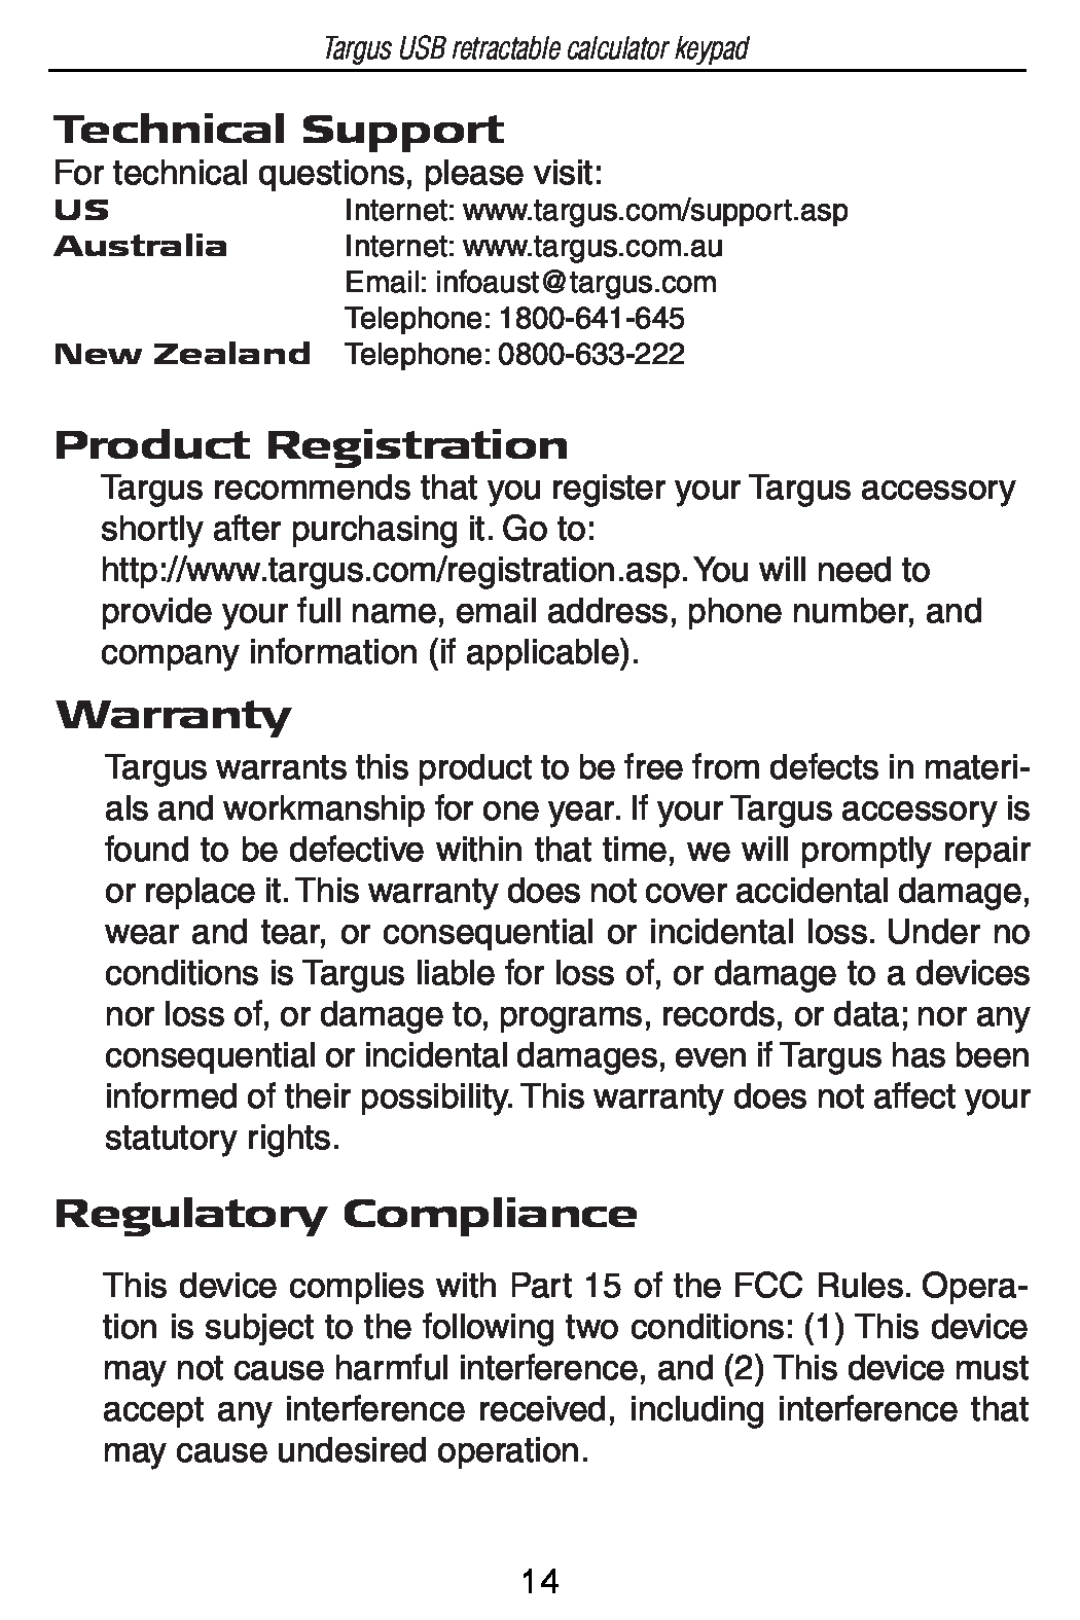 Targus USB Retractable Calculator Keypad Technical Support, Product Registration, Warranty, Regulatory Compliance 